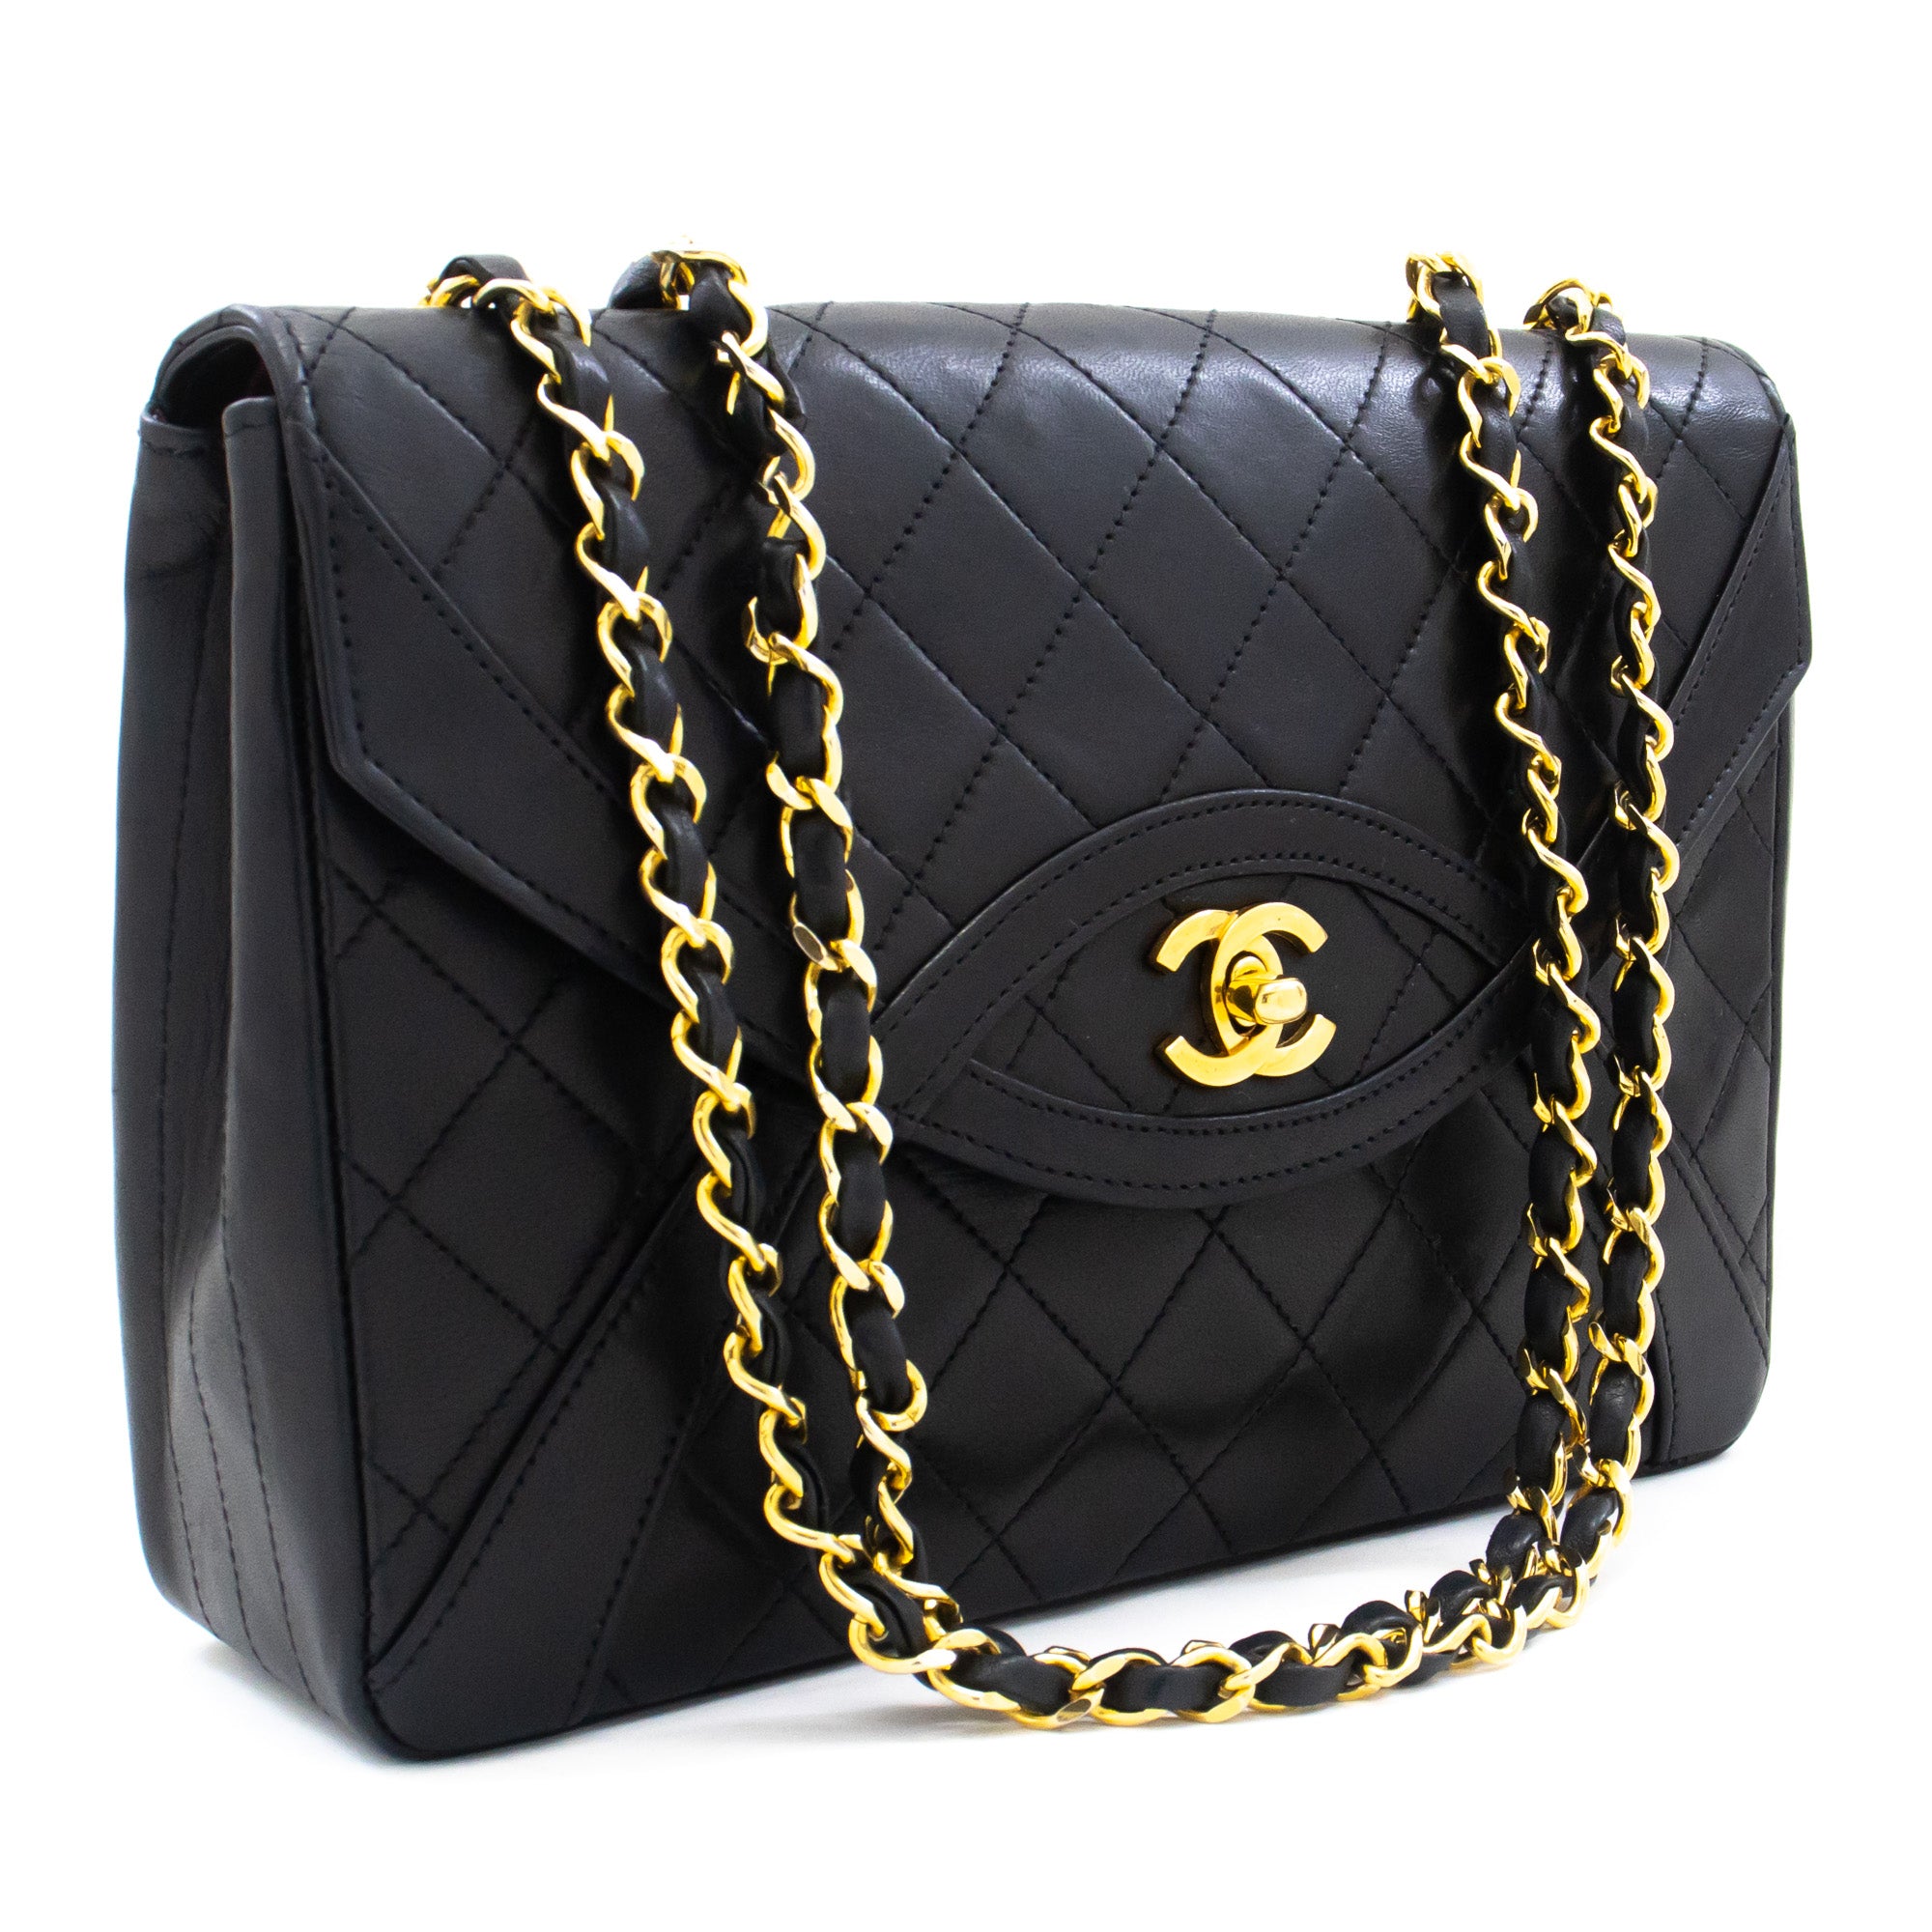 CHANEL Caviar Wallet On Chain WOC Black Shoulder Bag Crossbody L26